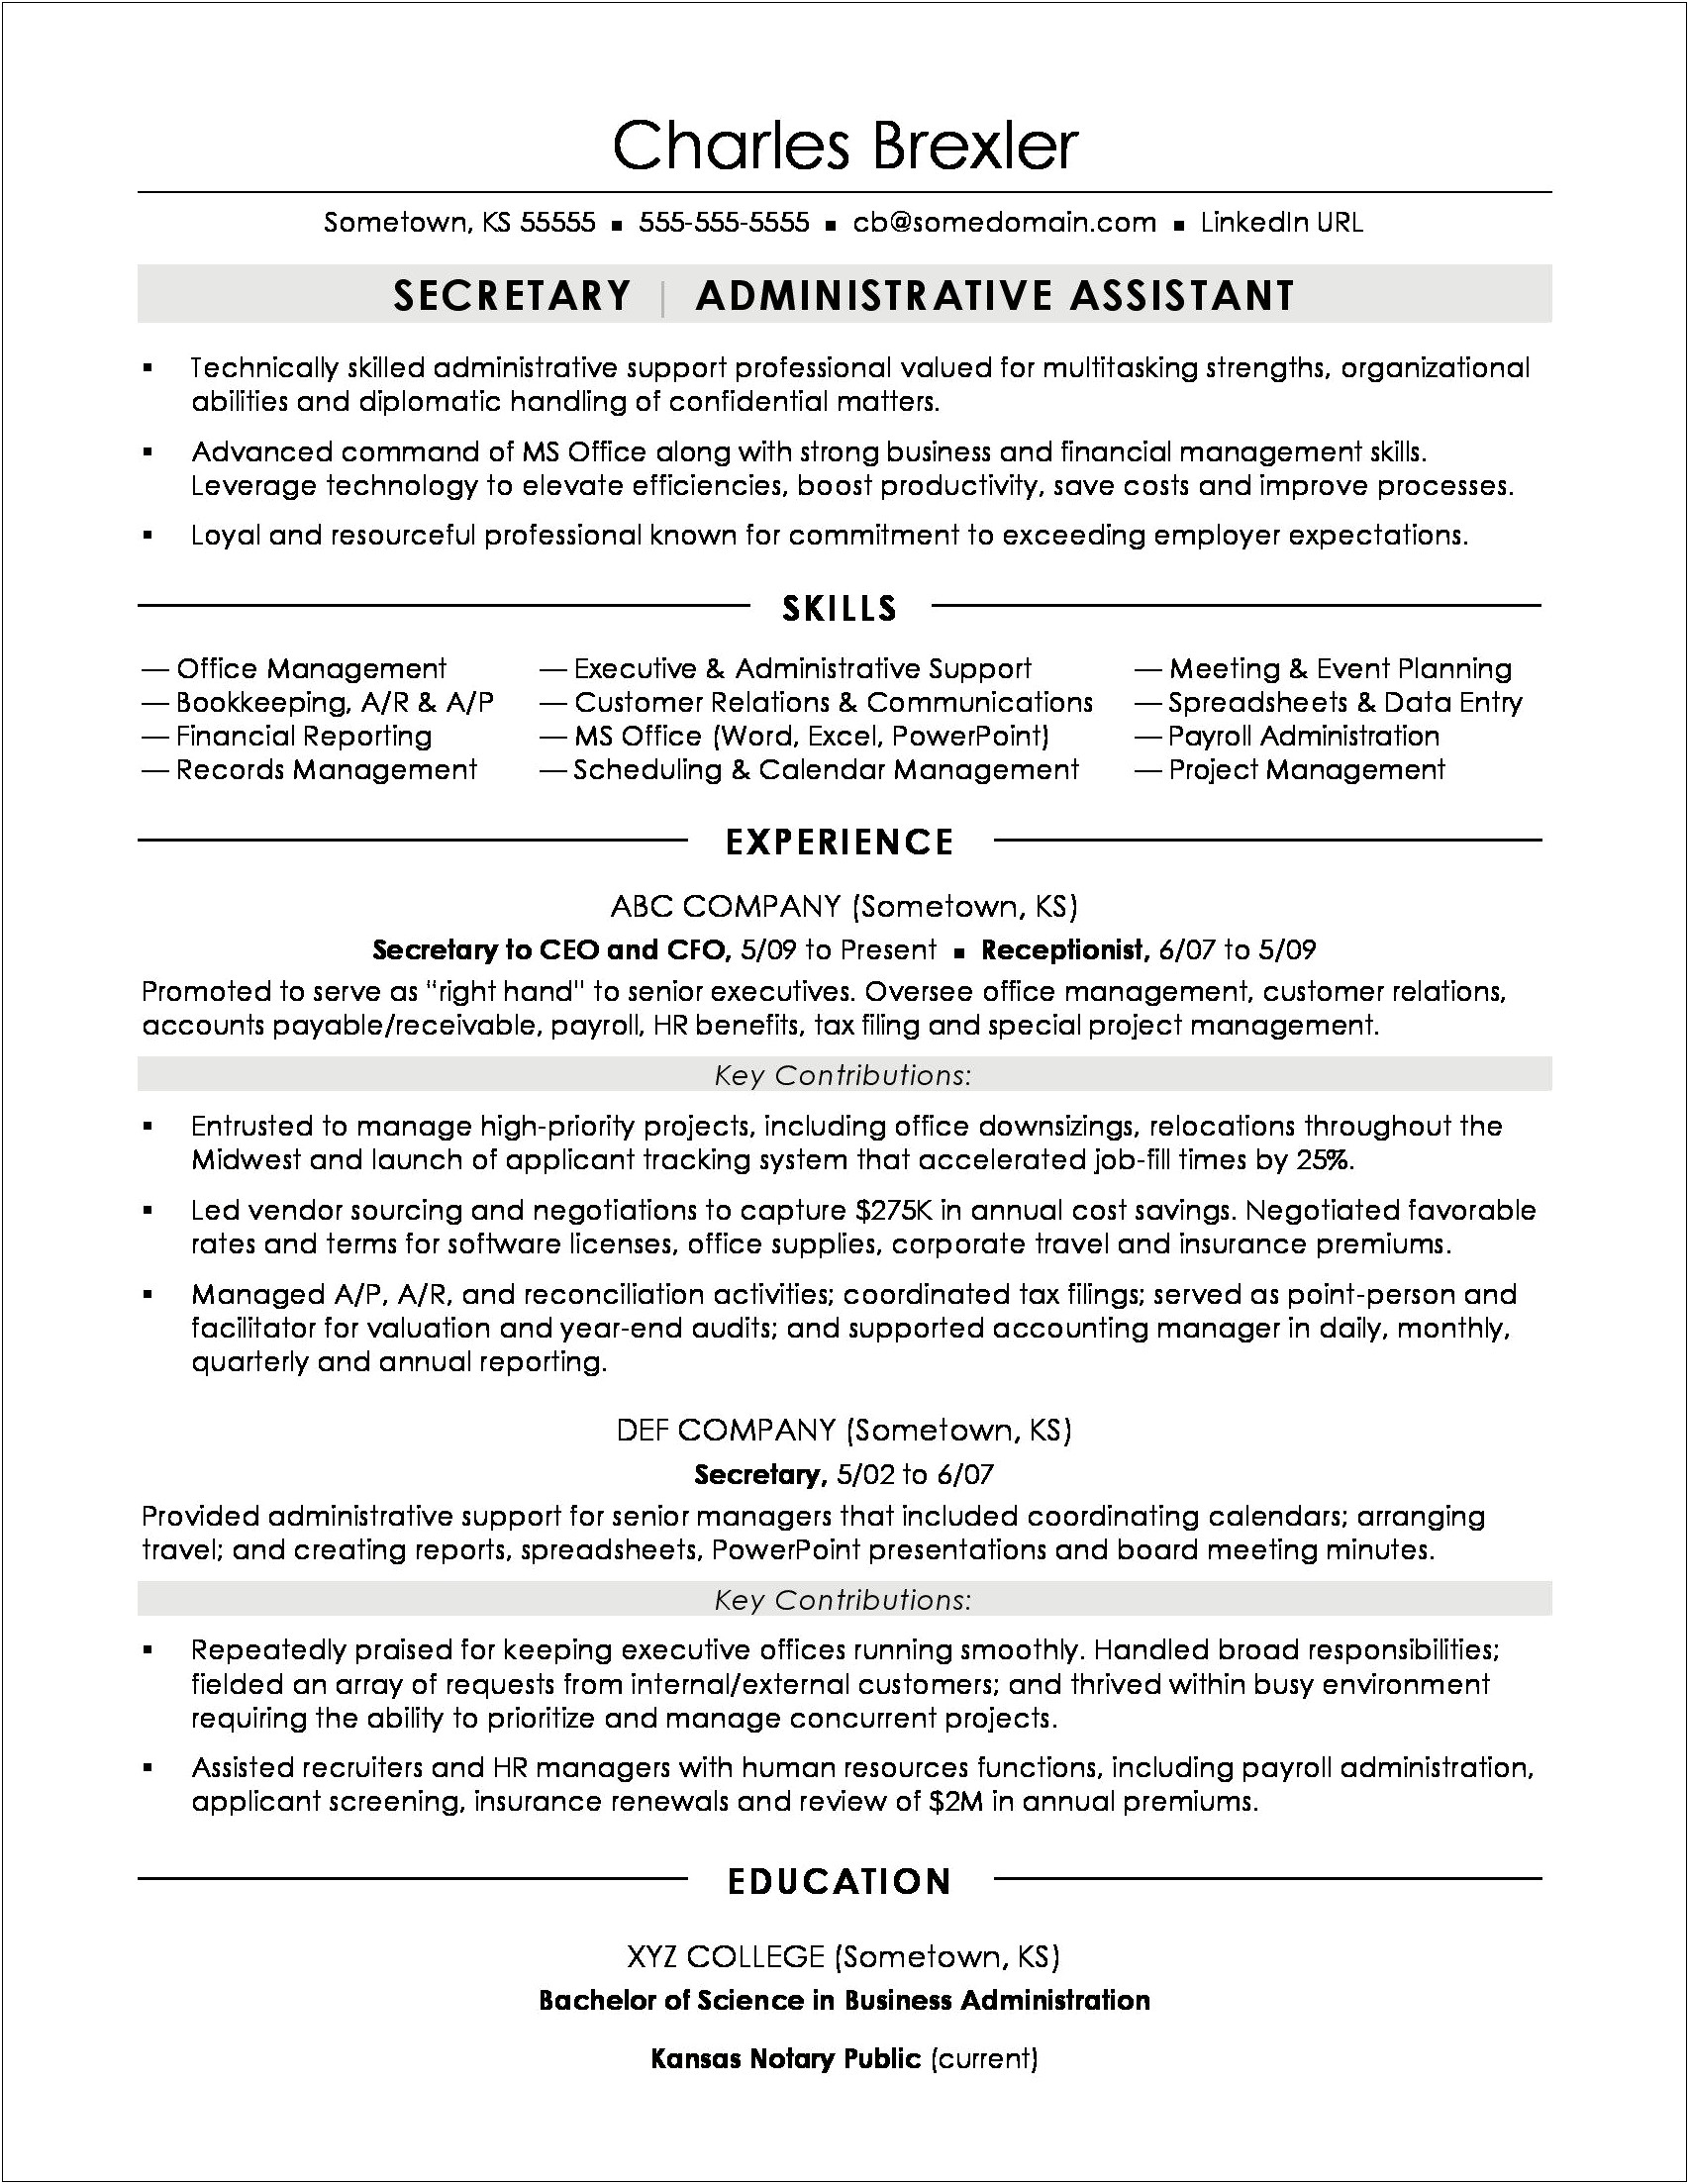 Control M Job Scheduling Resume